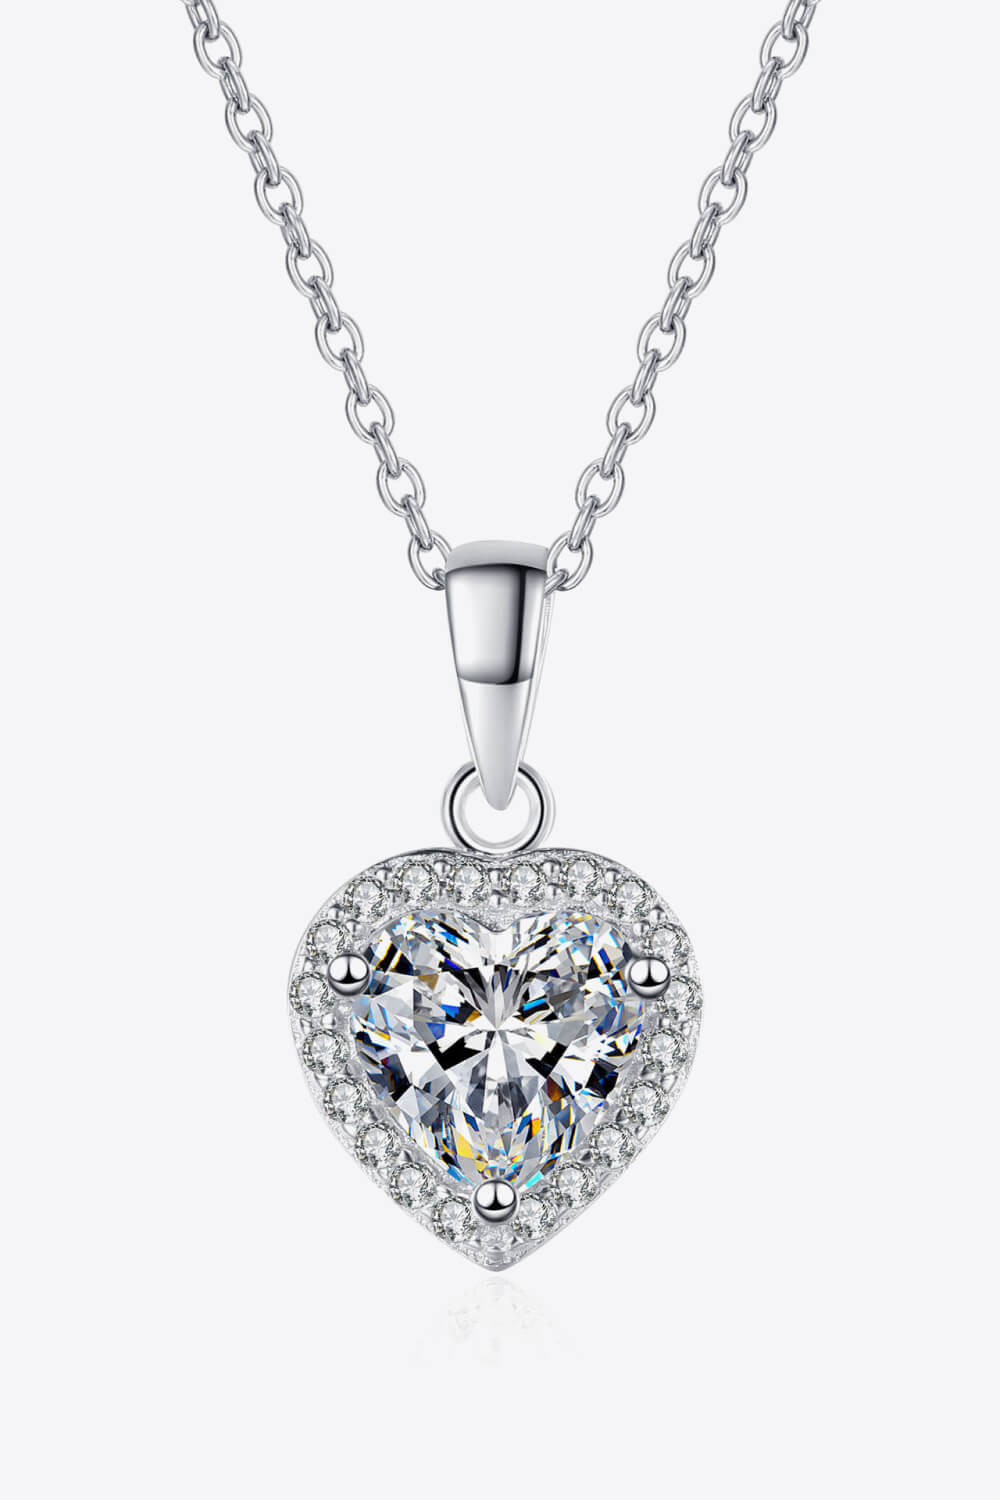 1 Carat Moissanite Heart Pendant Chain Necklace - PINKCOLADA-FINE JEWELRY-100100253378089